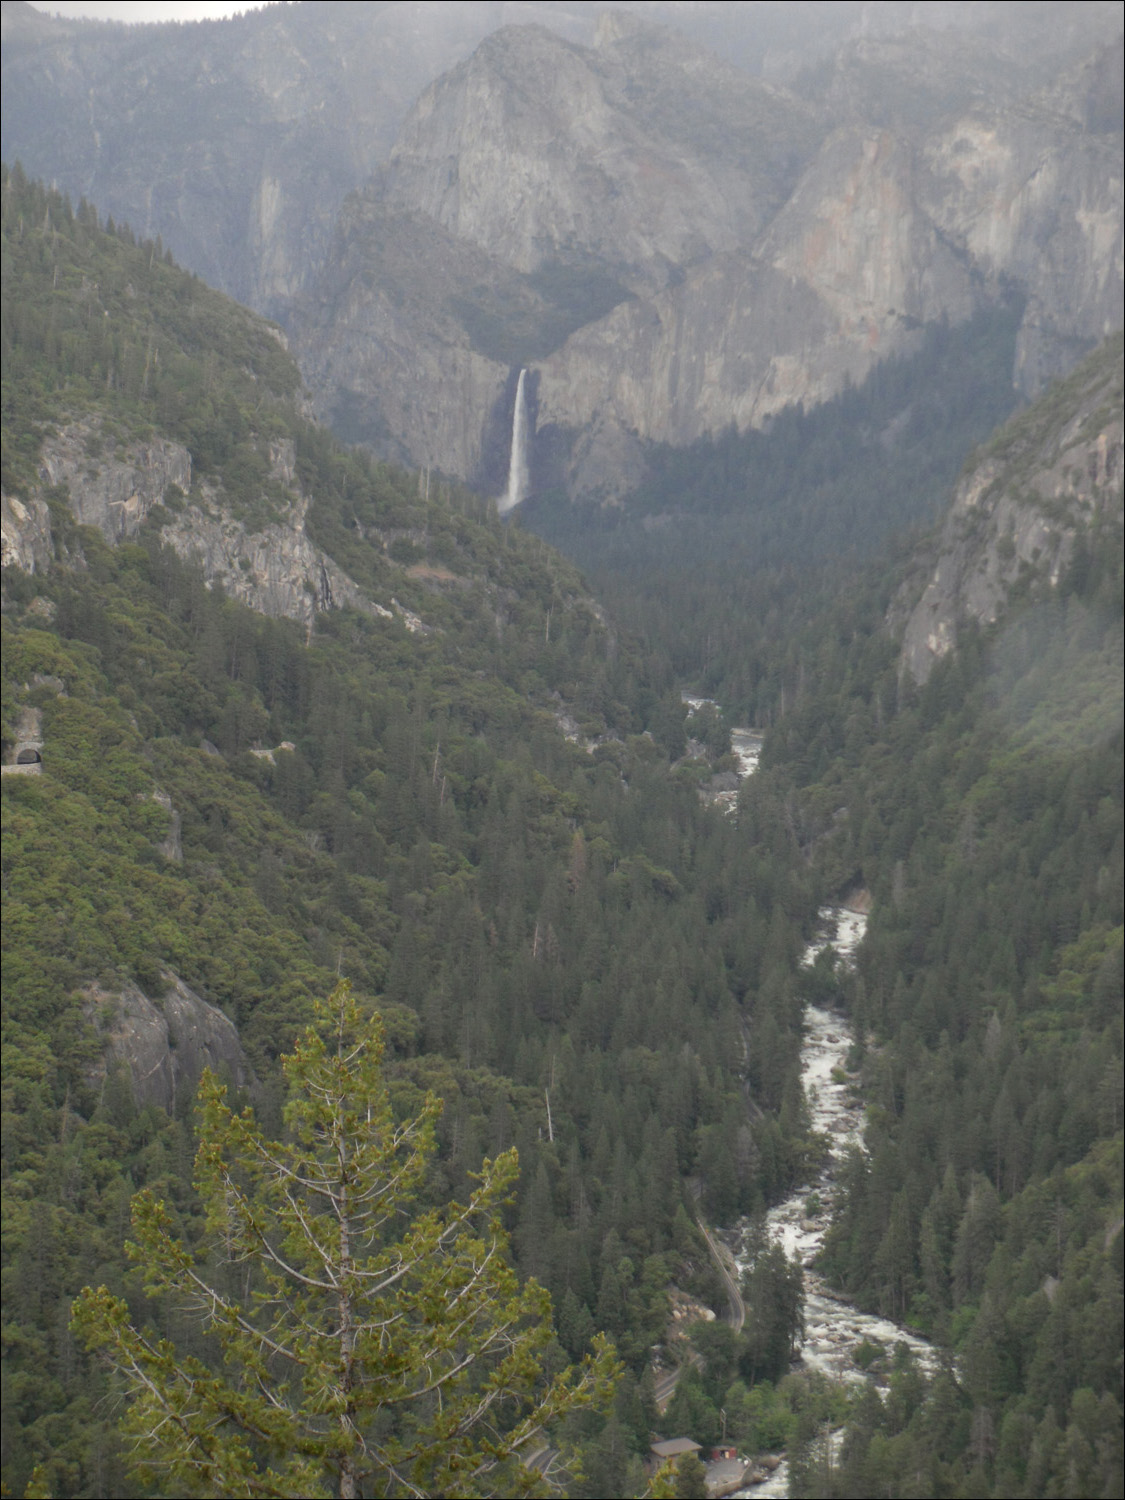 Bridal Vail falls as seen from 120 entrance to Yosemite Valley